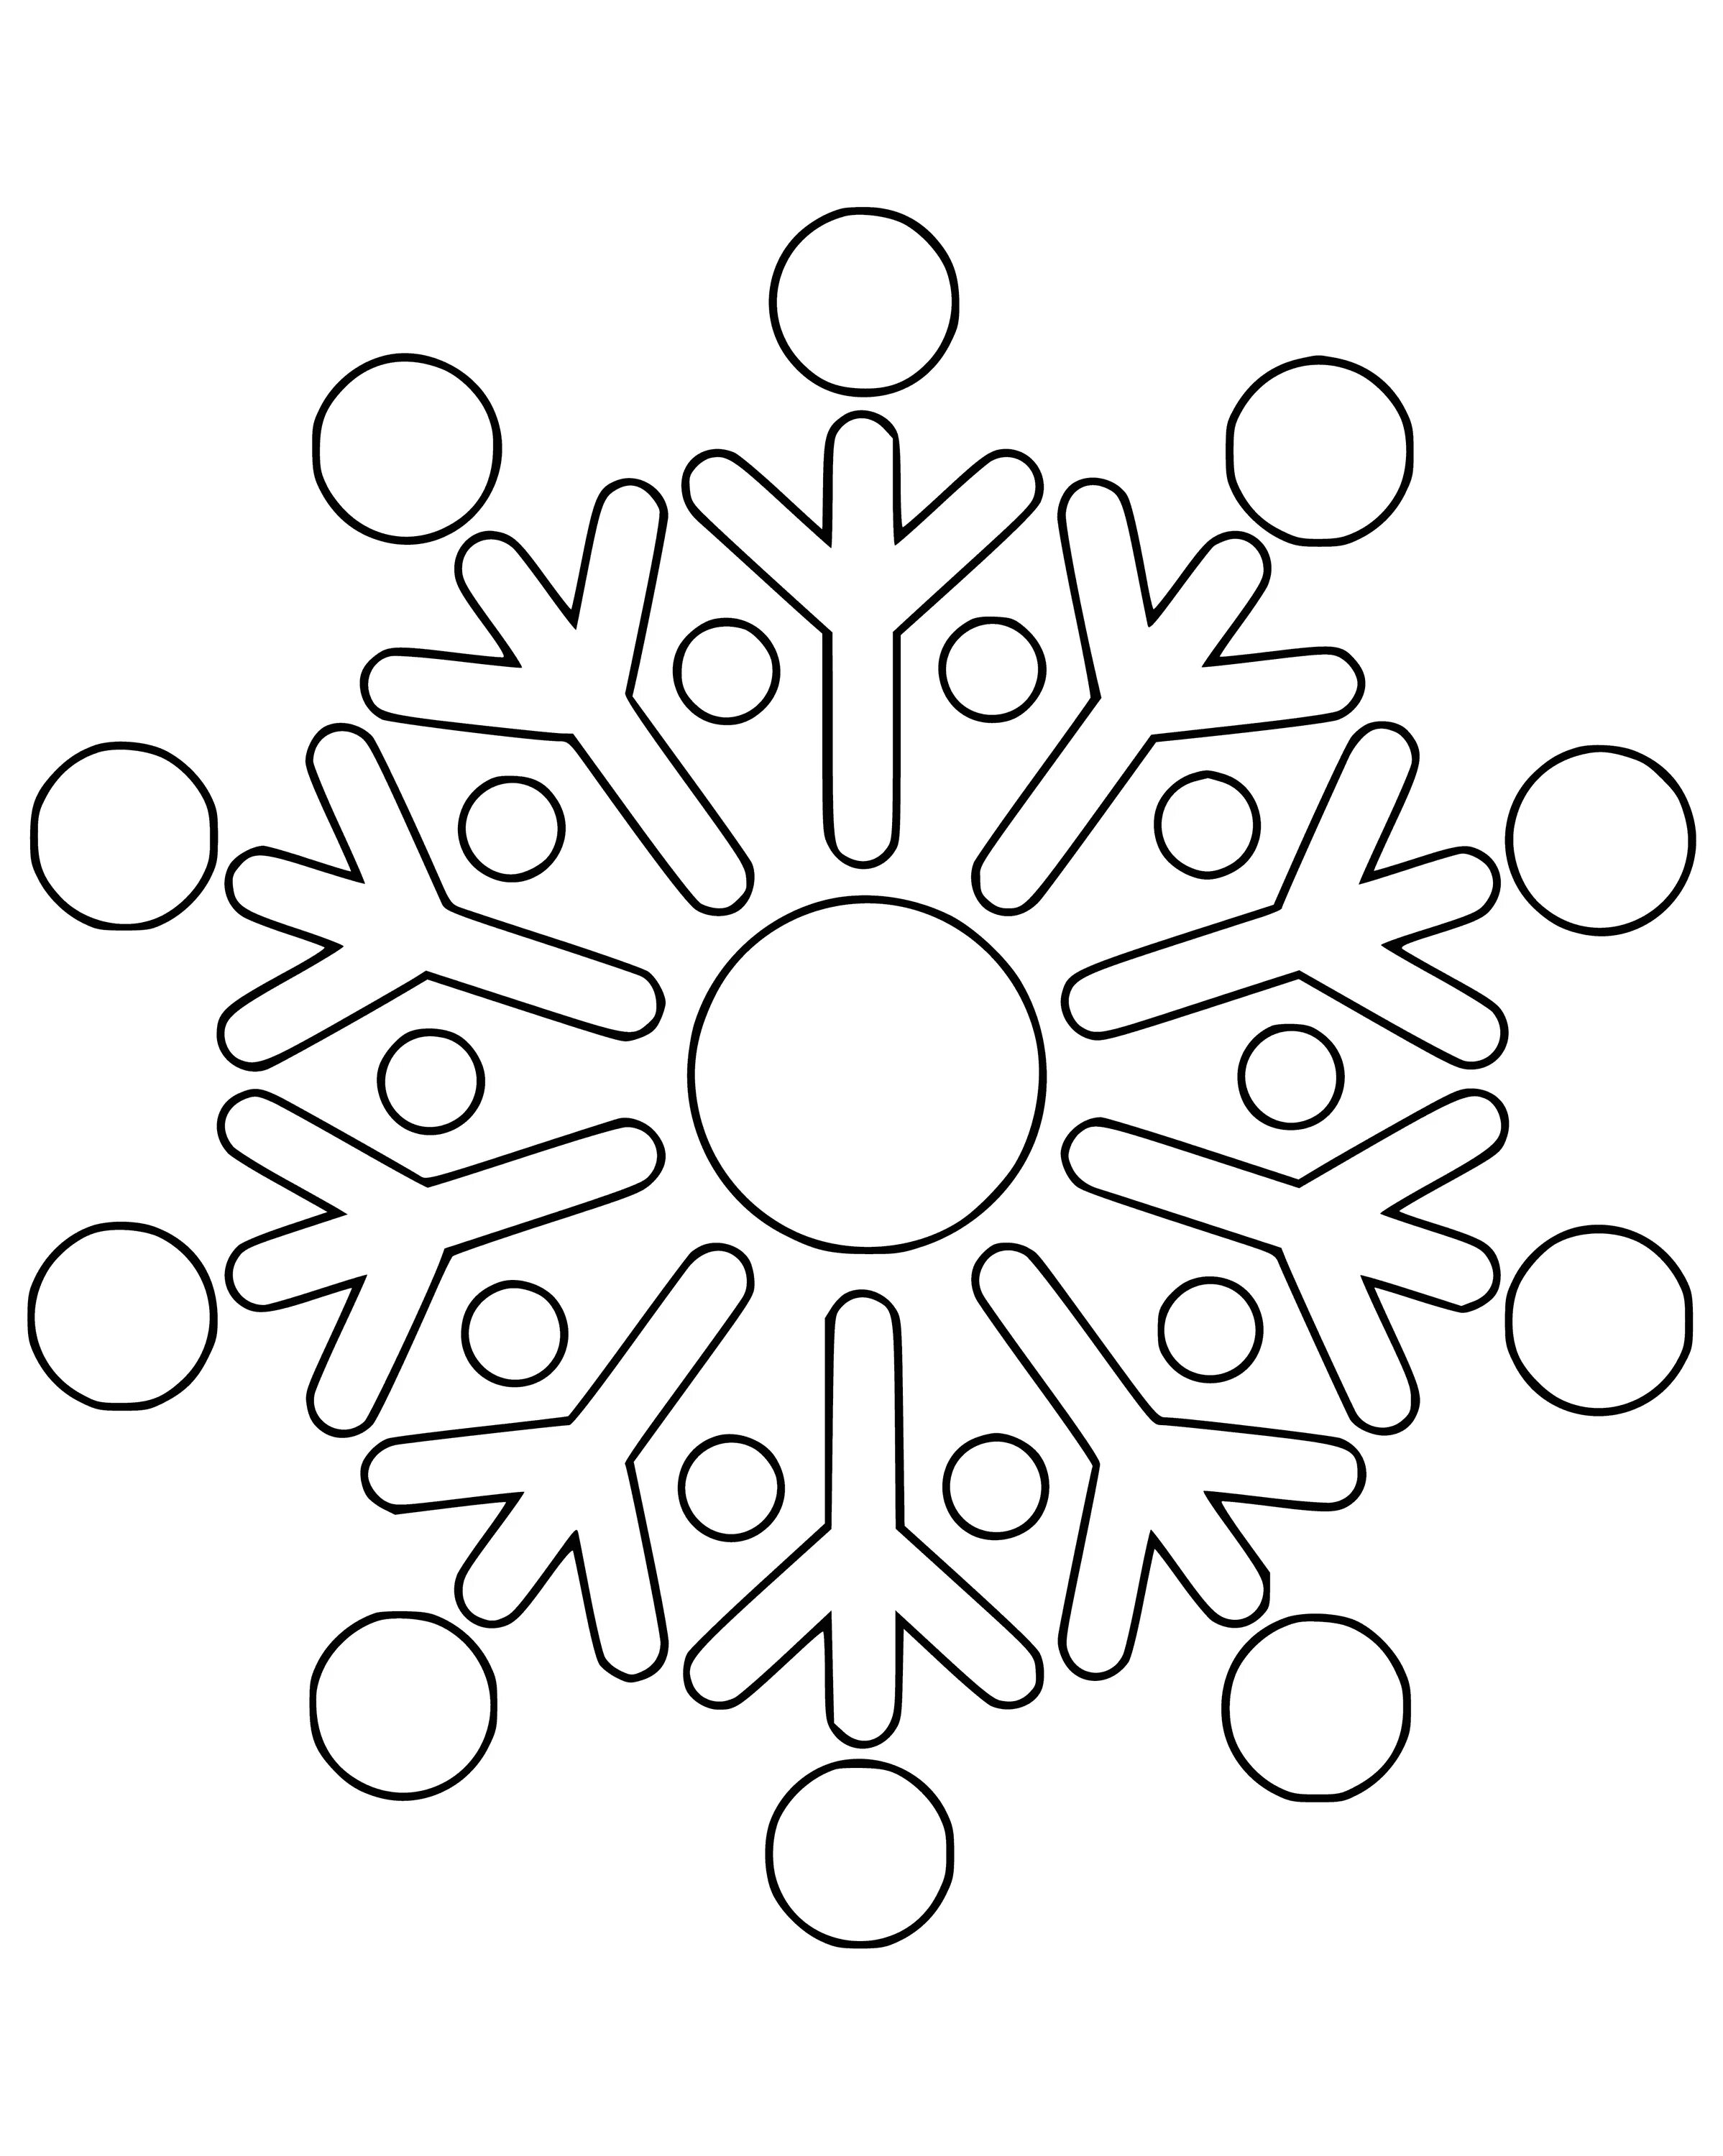 Snowflake pattern #3